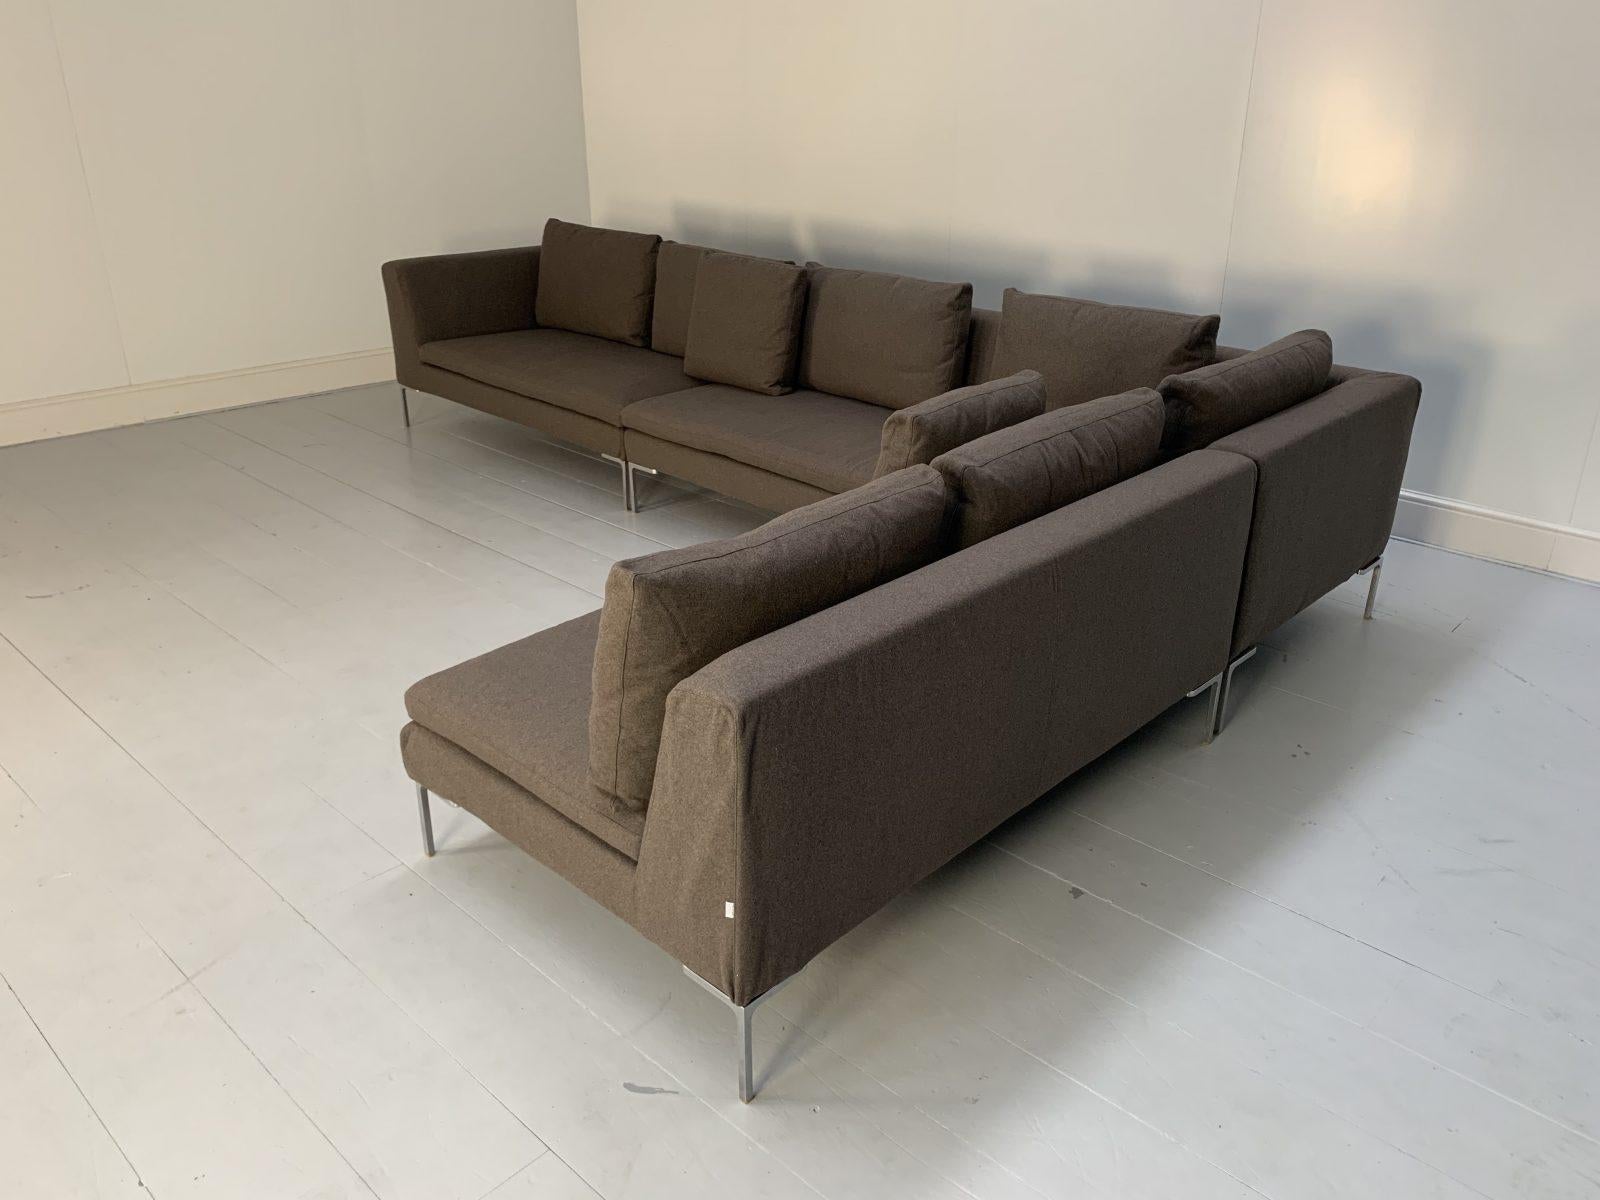 B&B Italia “Charles” L-Shape Sectional Sofa in Beige “Serra” Cashmere For Sale 2